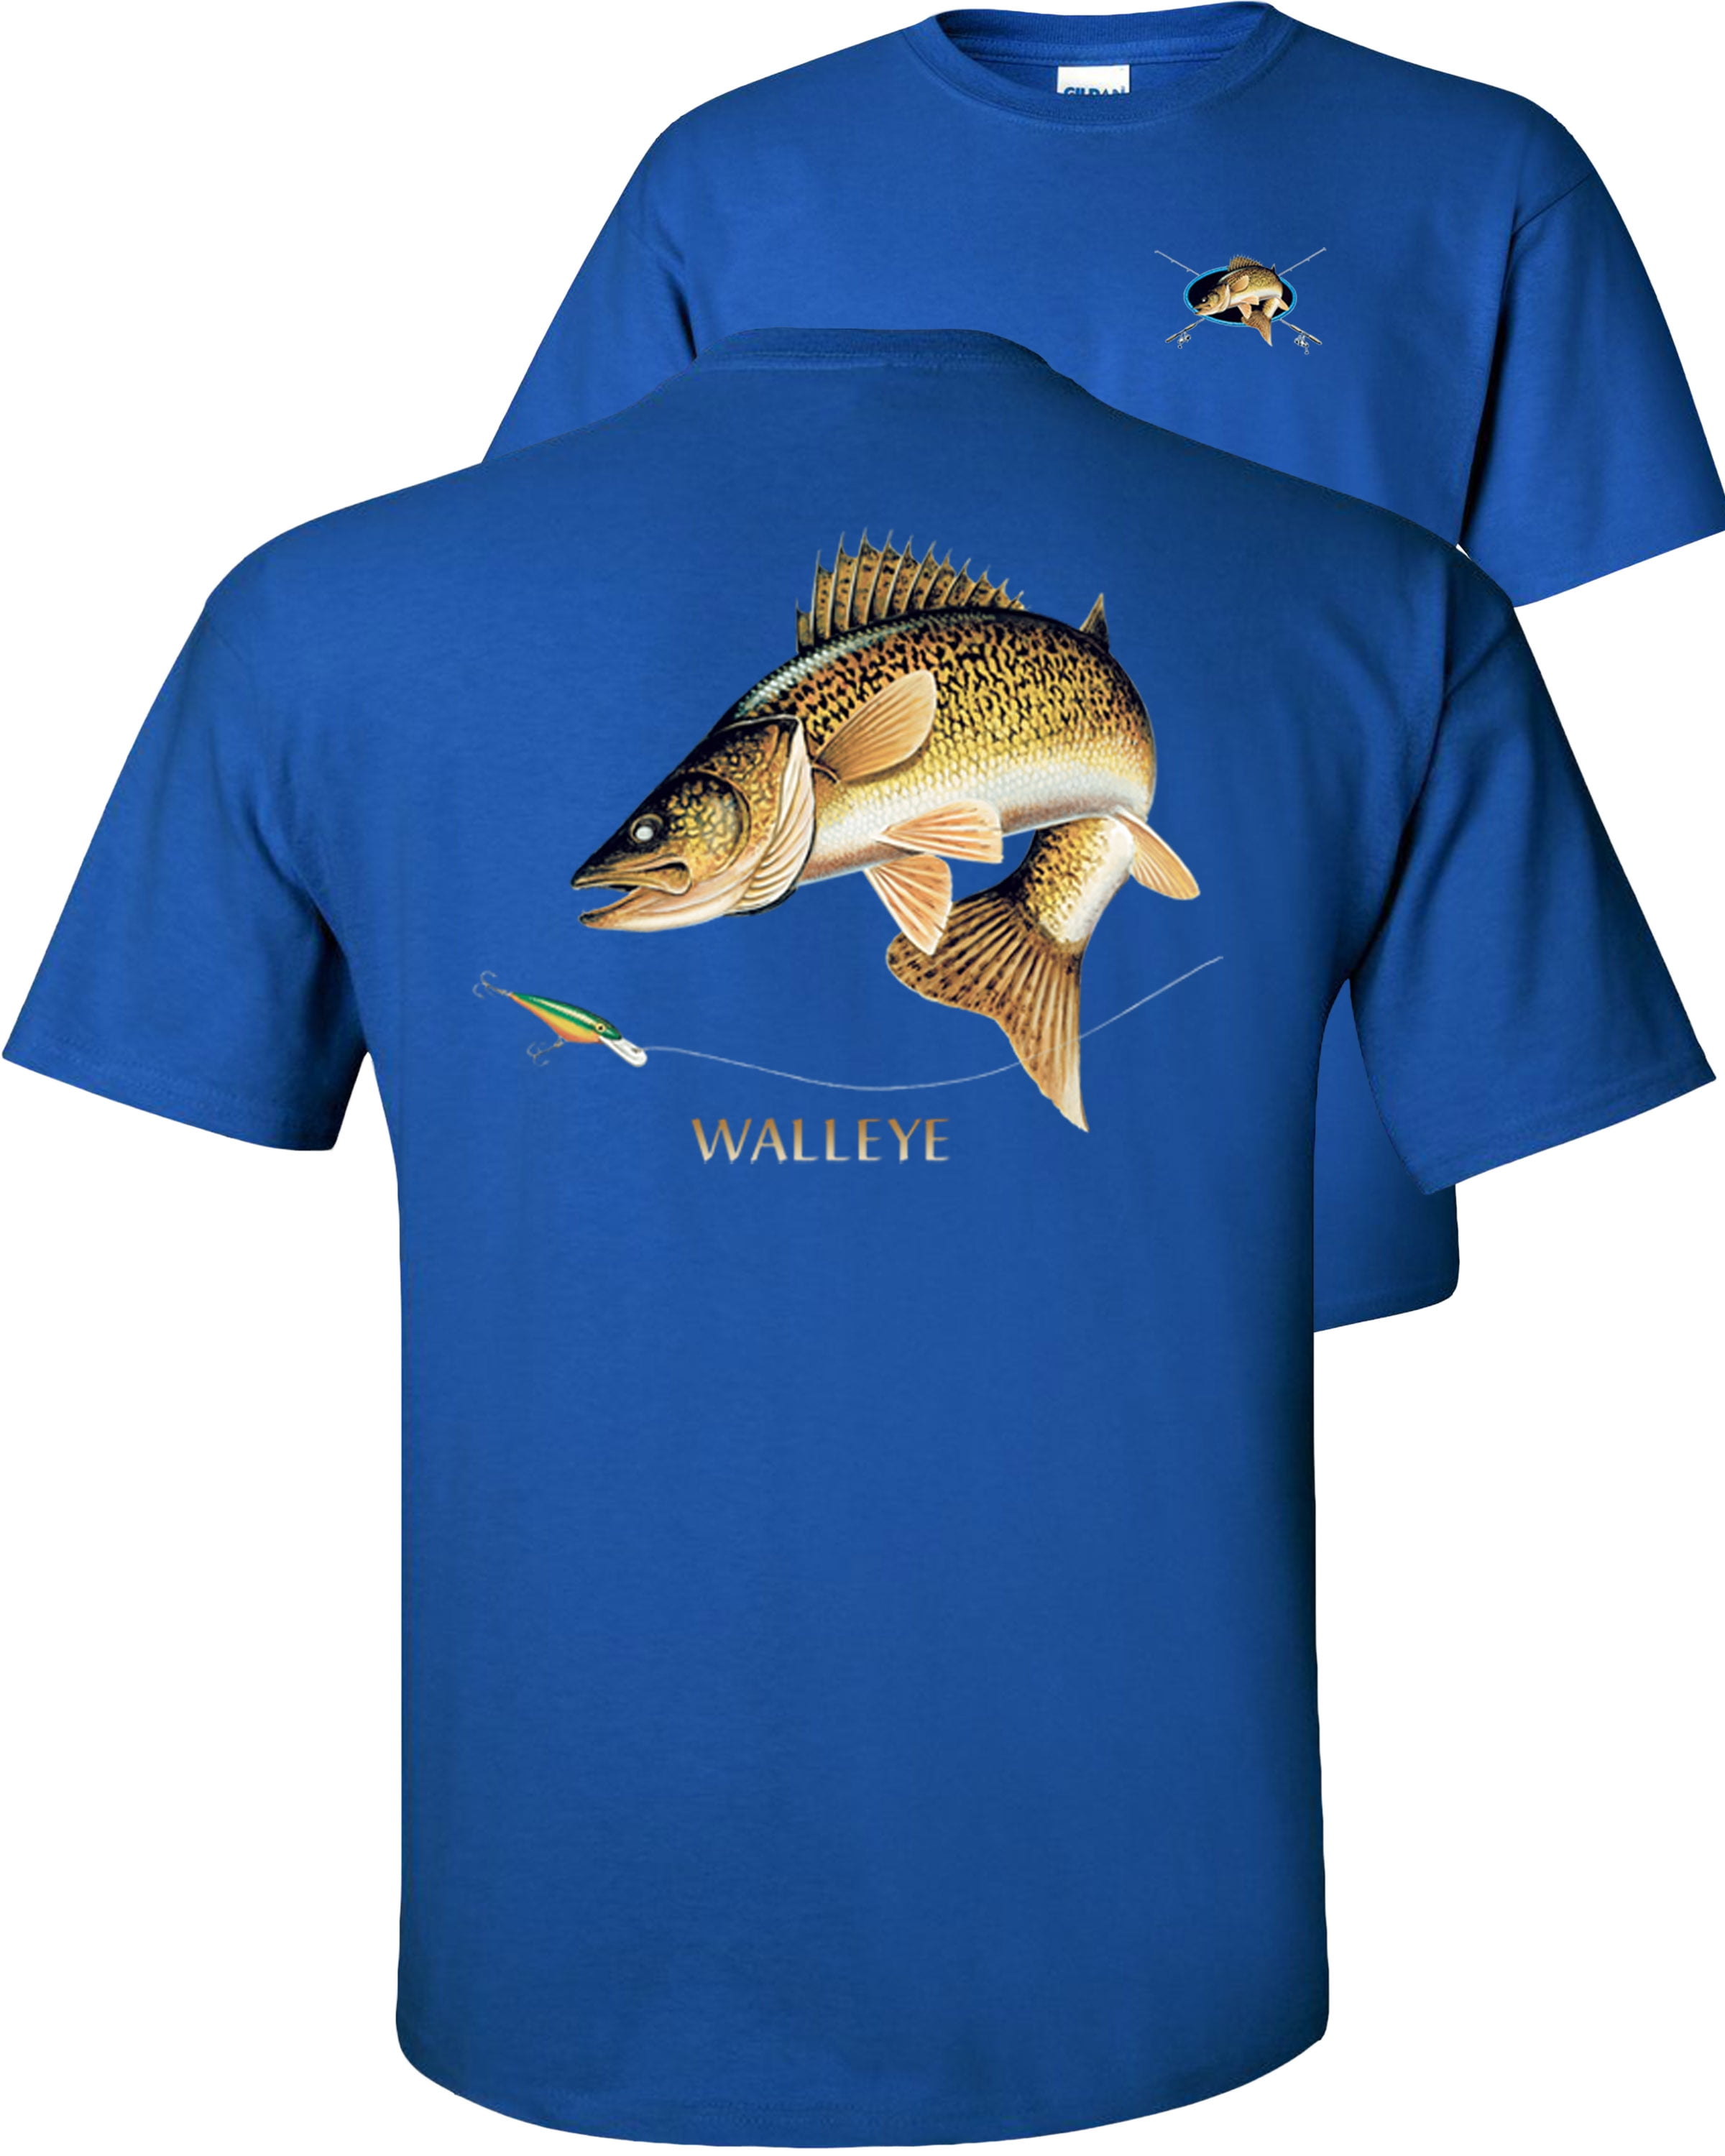 Fair Game Walleye T-Shirt Combination Profile-Navy-XL 